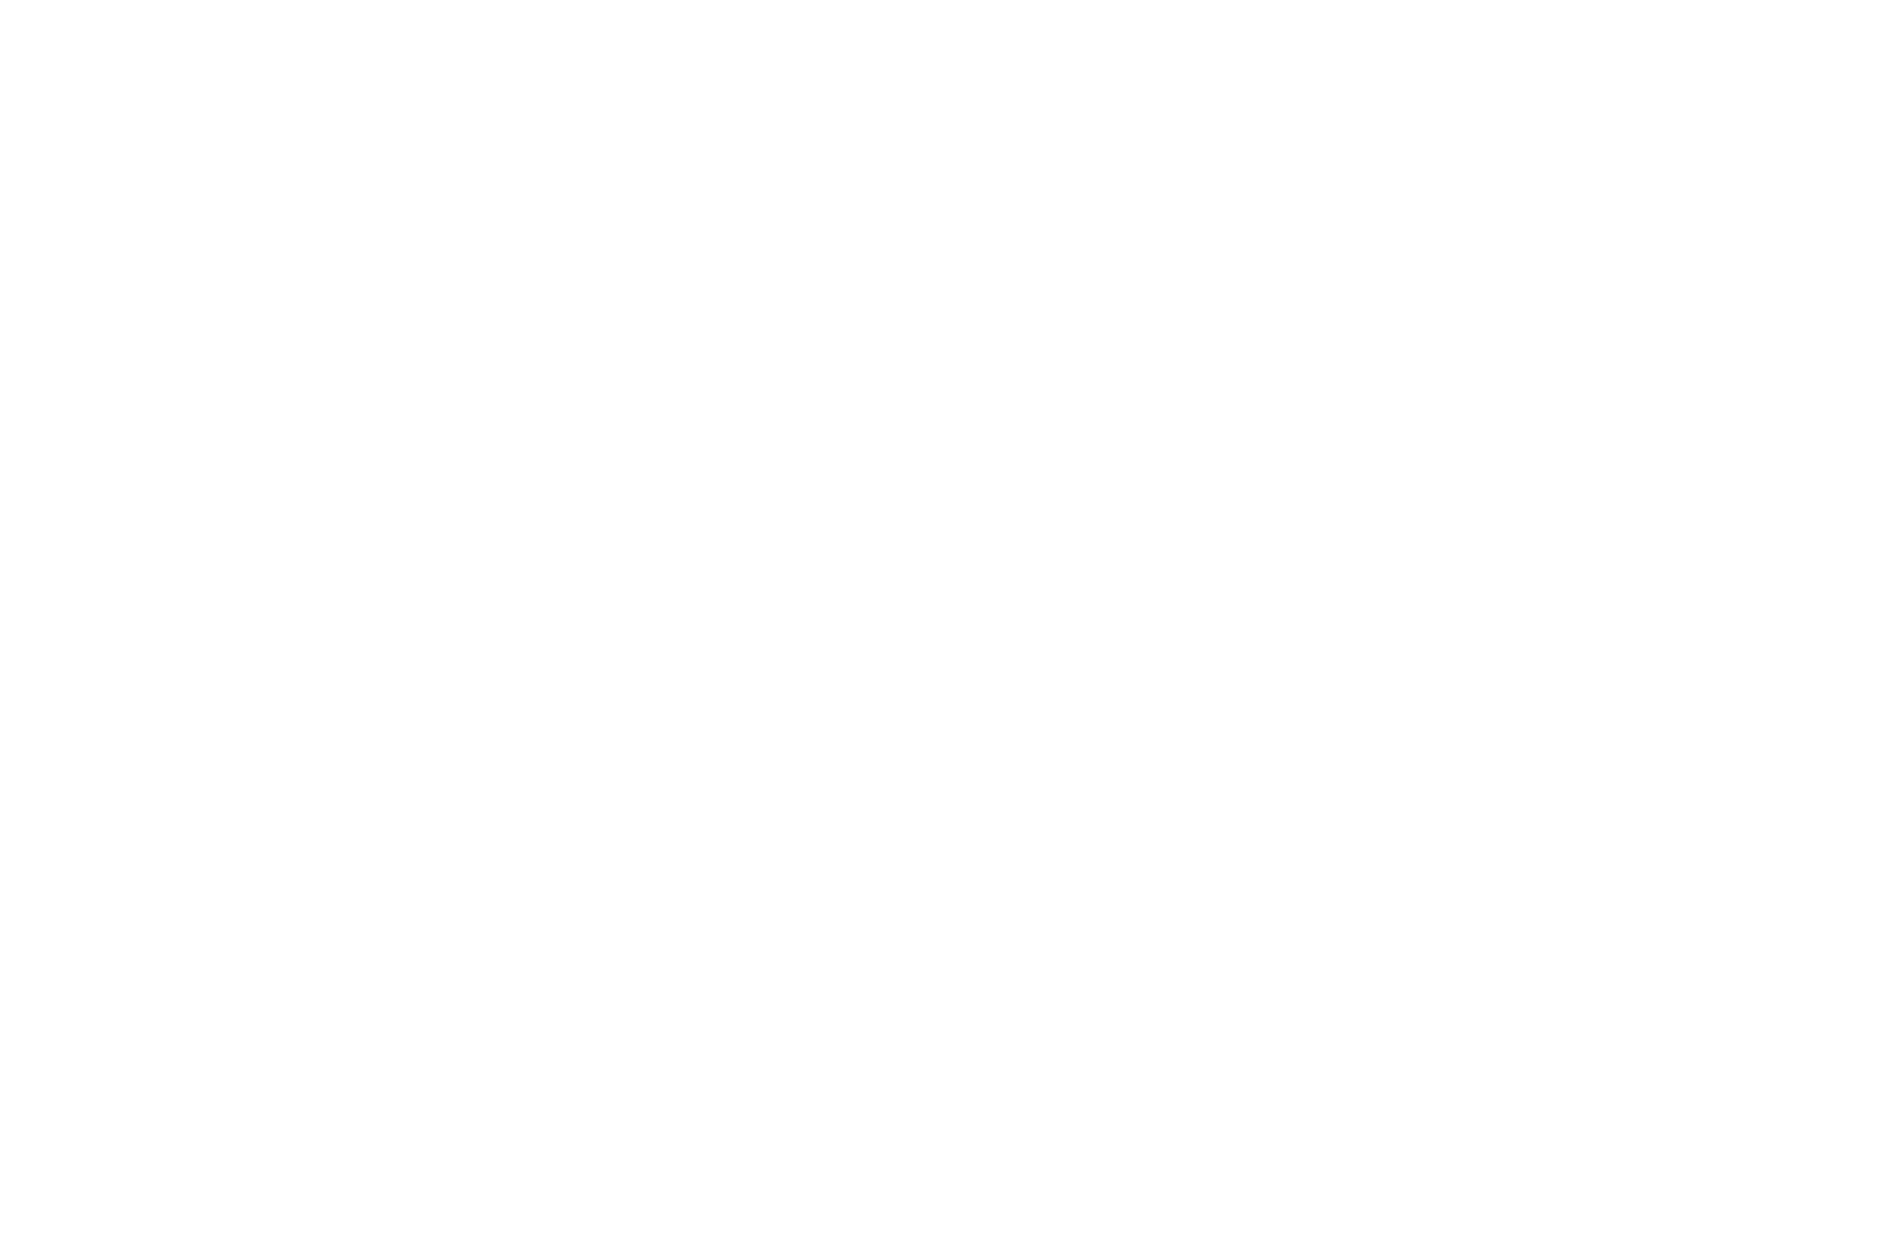 embedded wireless